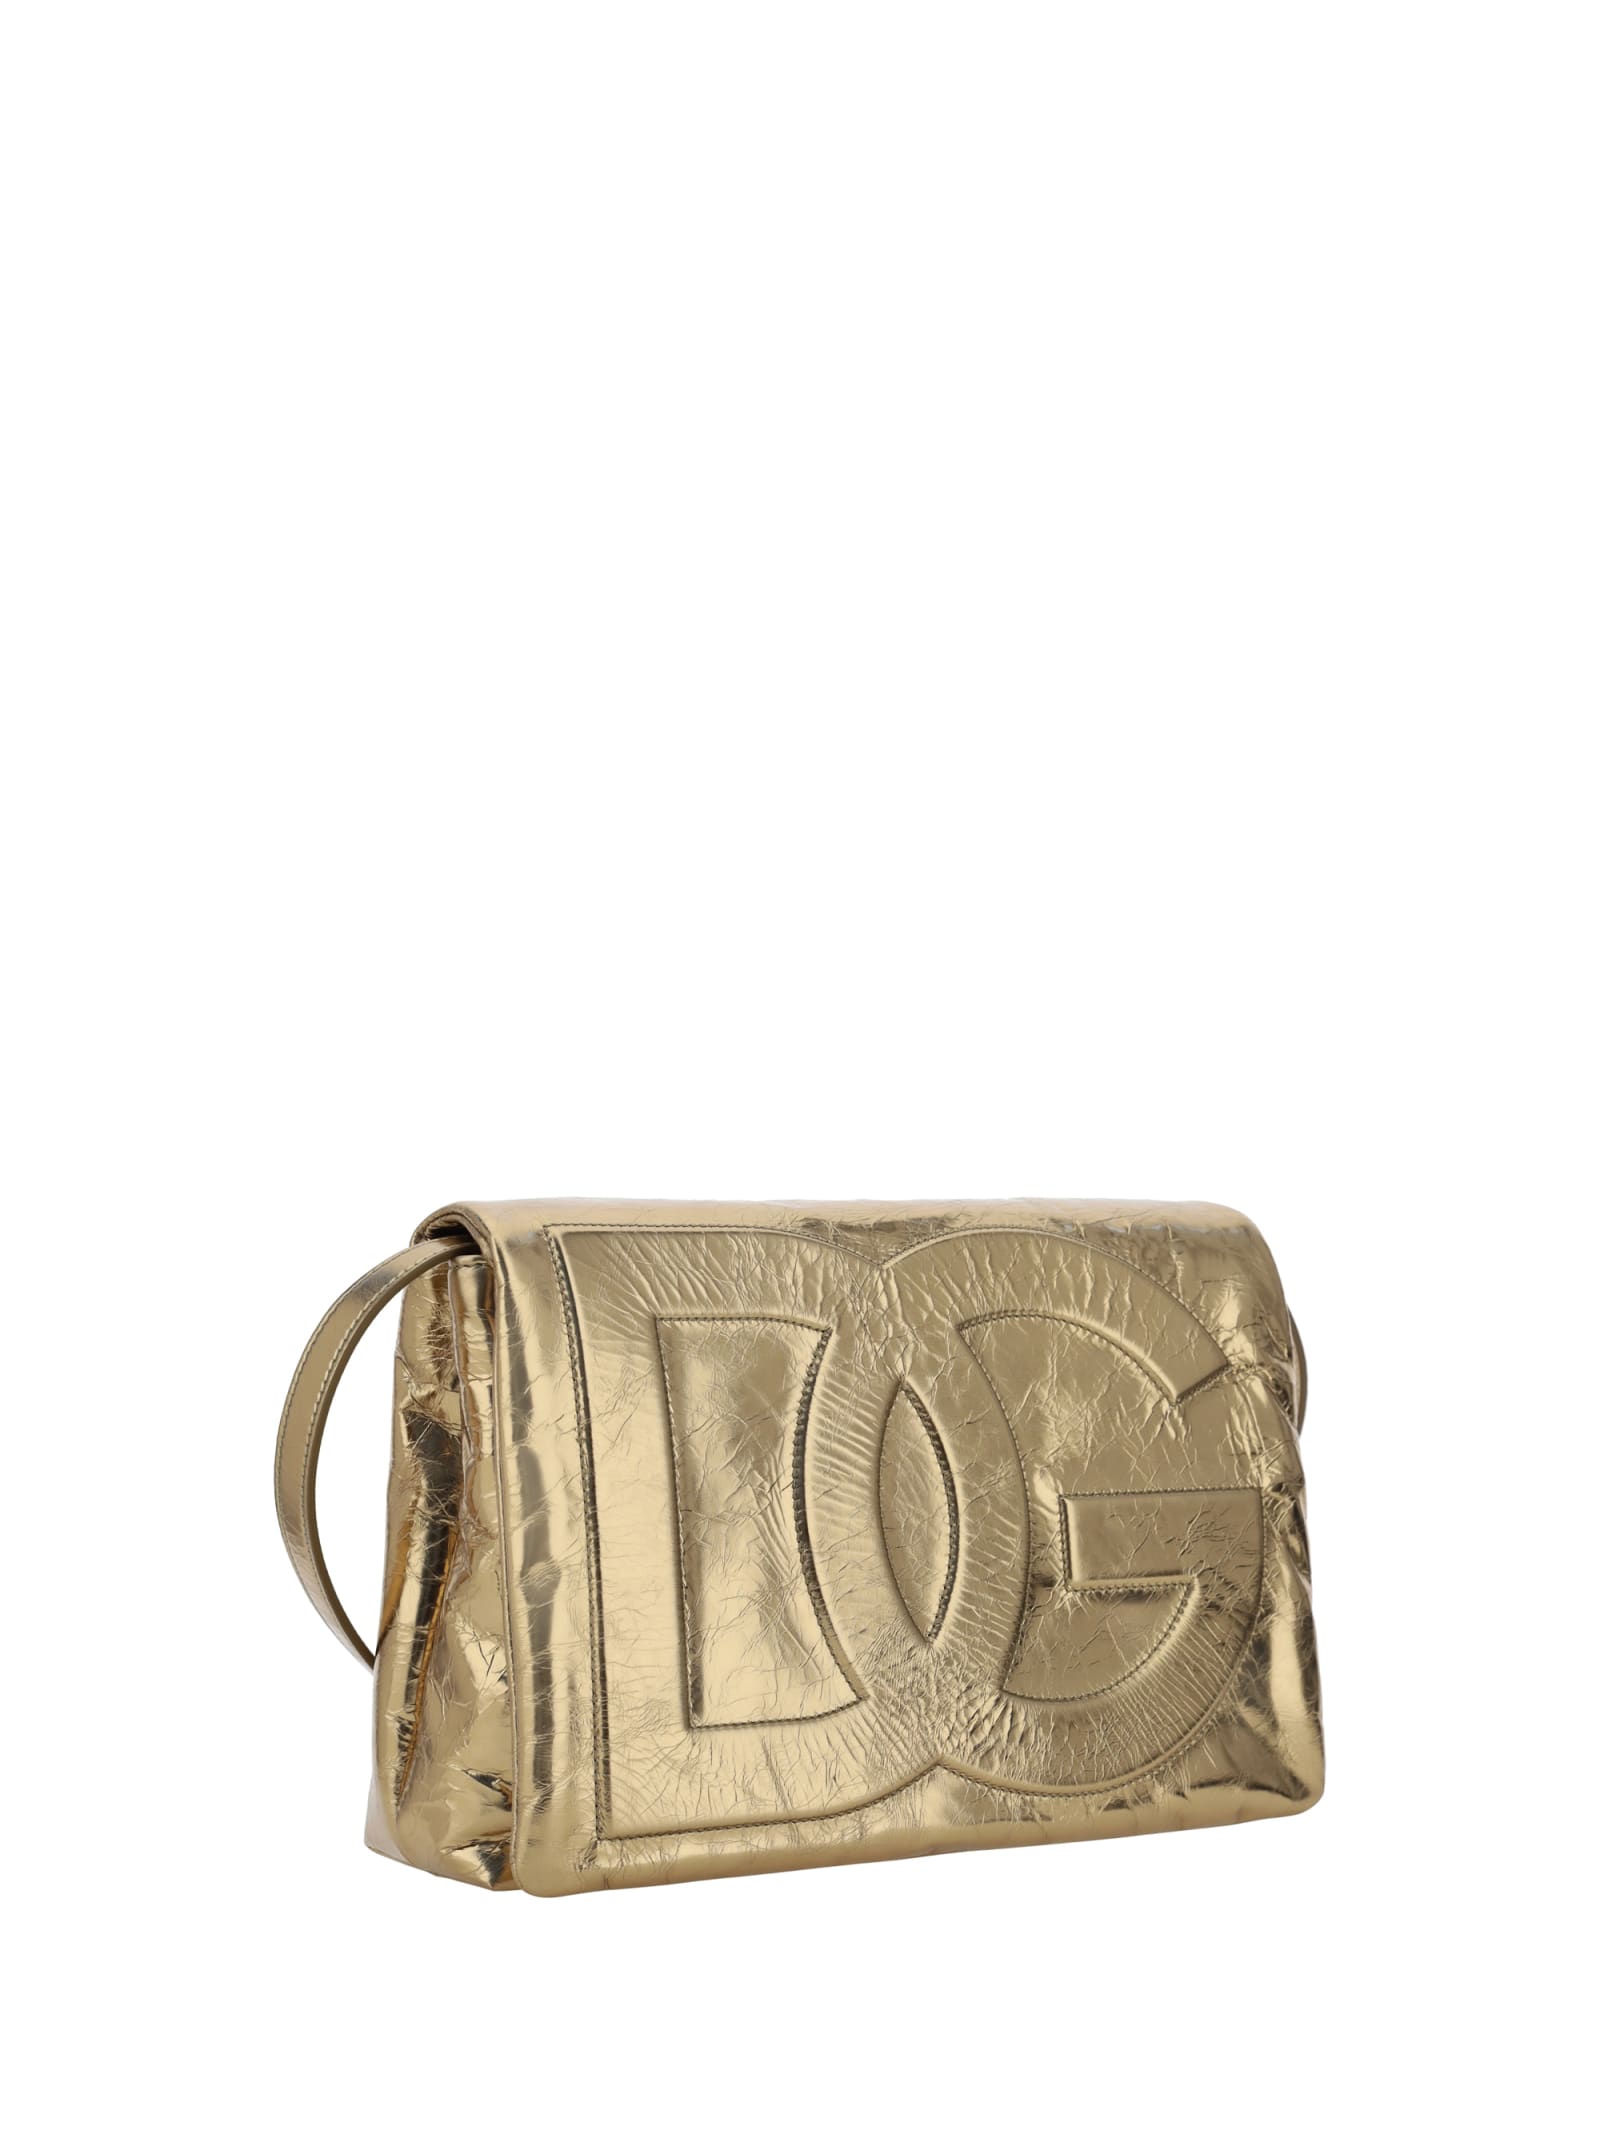 Dolce & Gabbana Pochette Lame In Gold